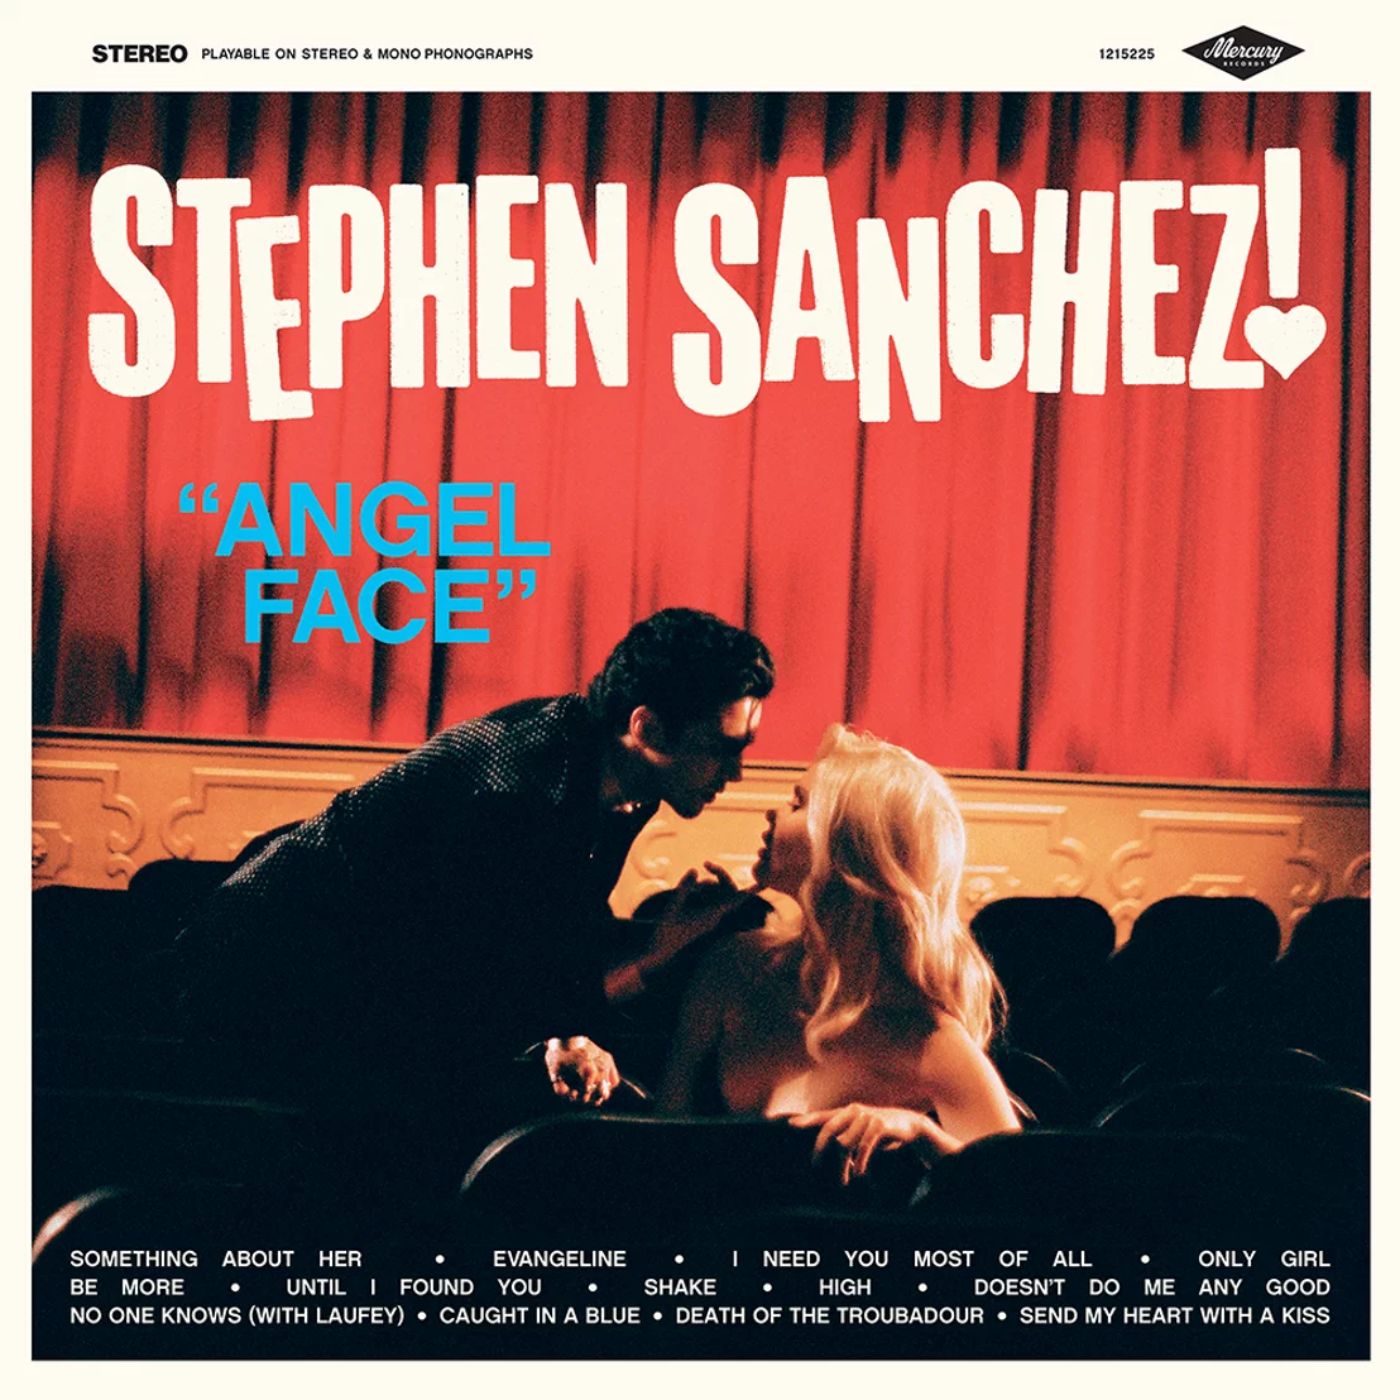 Capa do disco "Angel face" de Stephen Sanchez